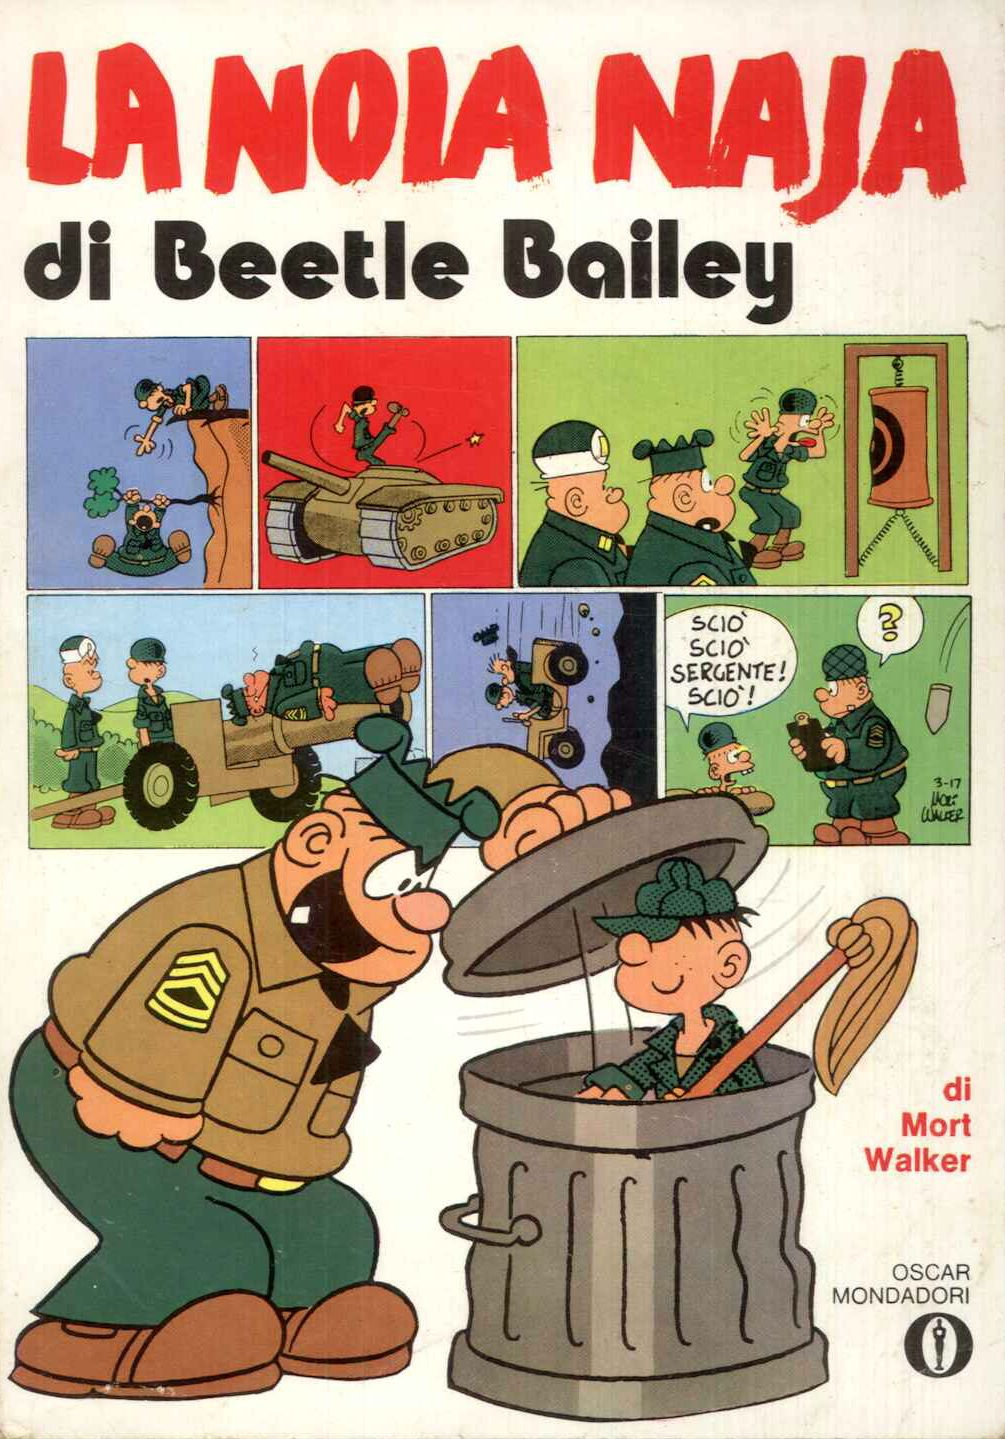 La noia naja di Beetle Bailey